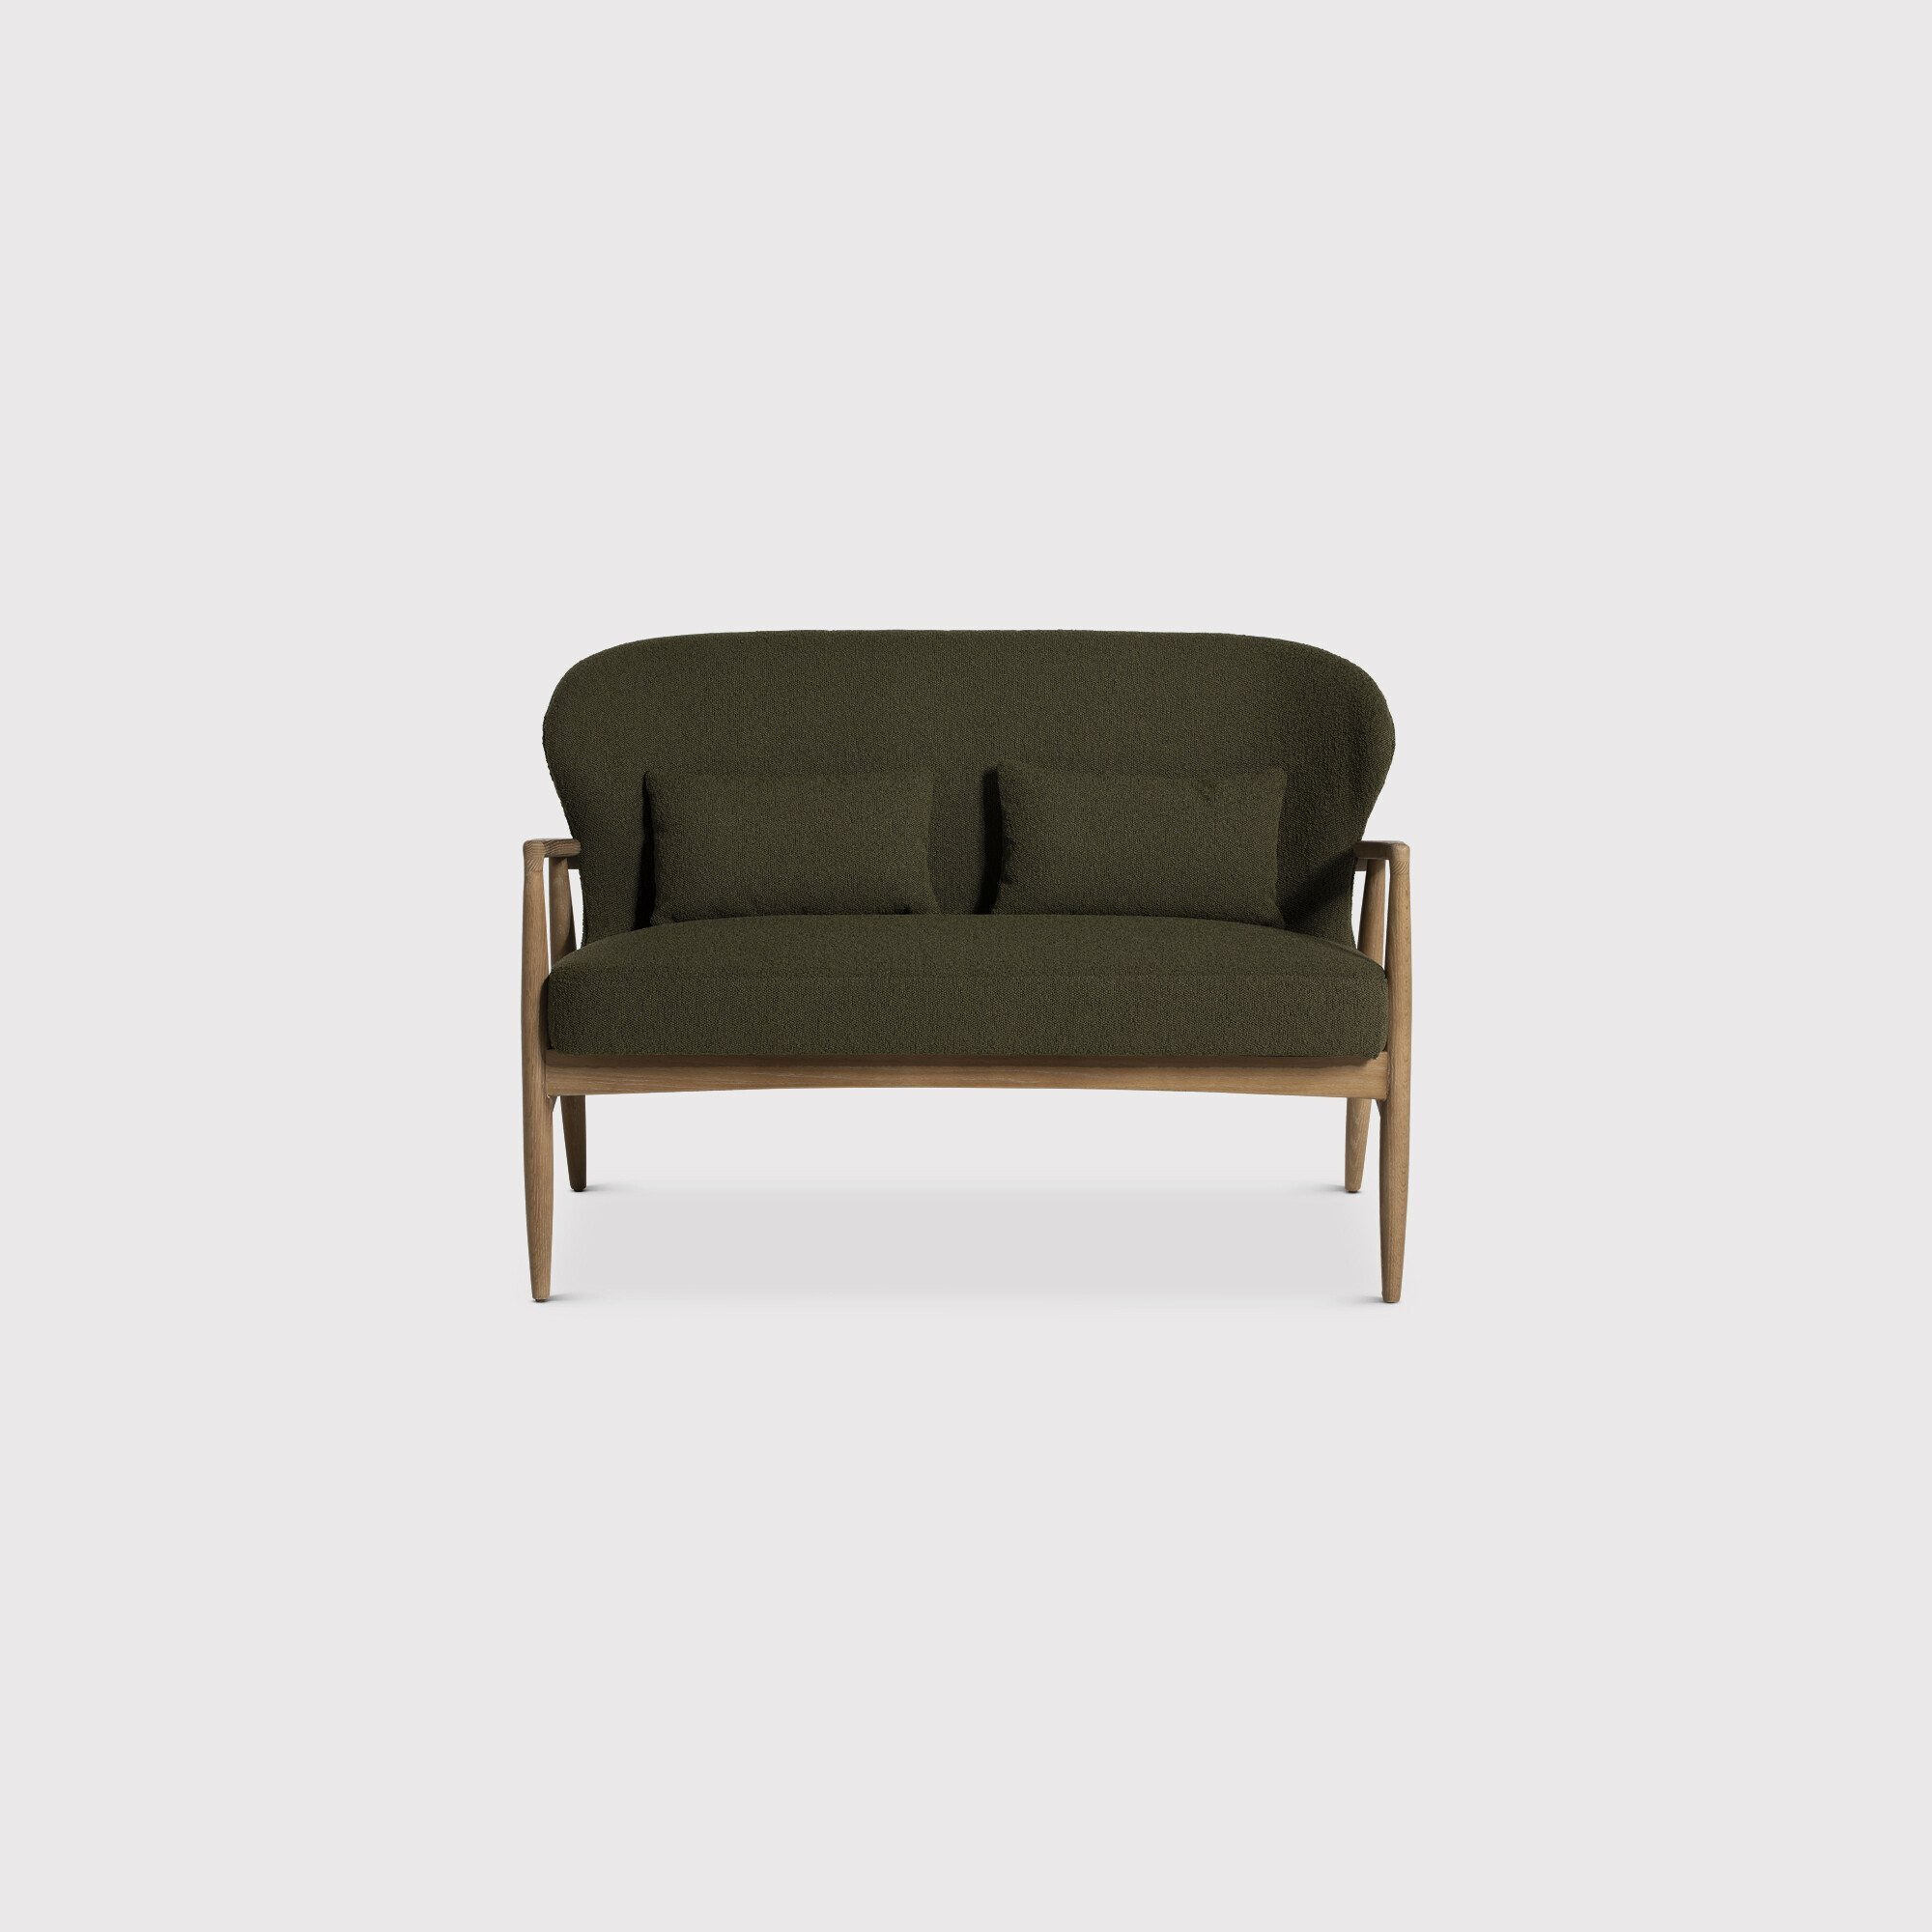 Pinter 2 Seater Sofa, Green Fabric - Barker & Stonehouse - image 1